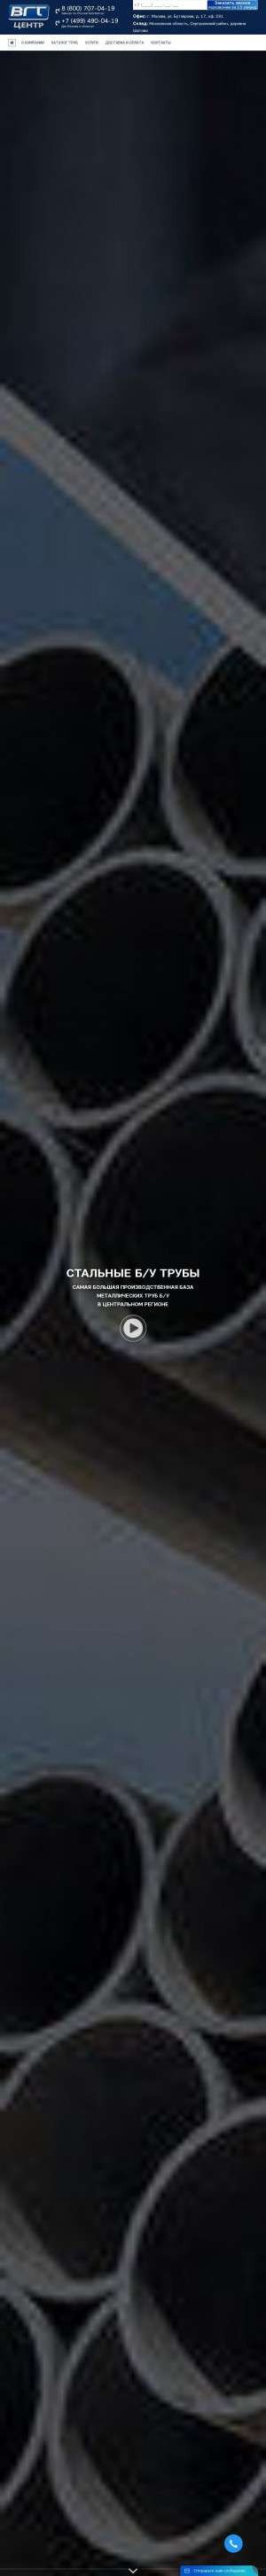 Предпросмотр для www.vgt-centr.ru — ВГТ-центр